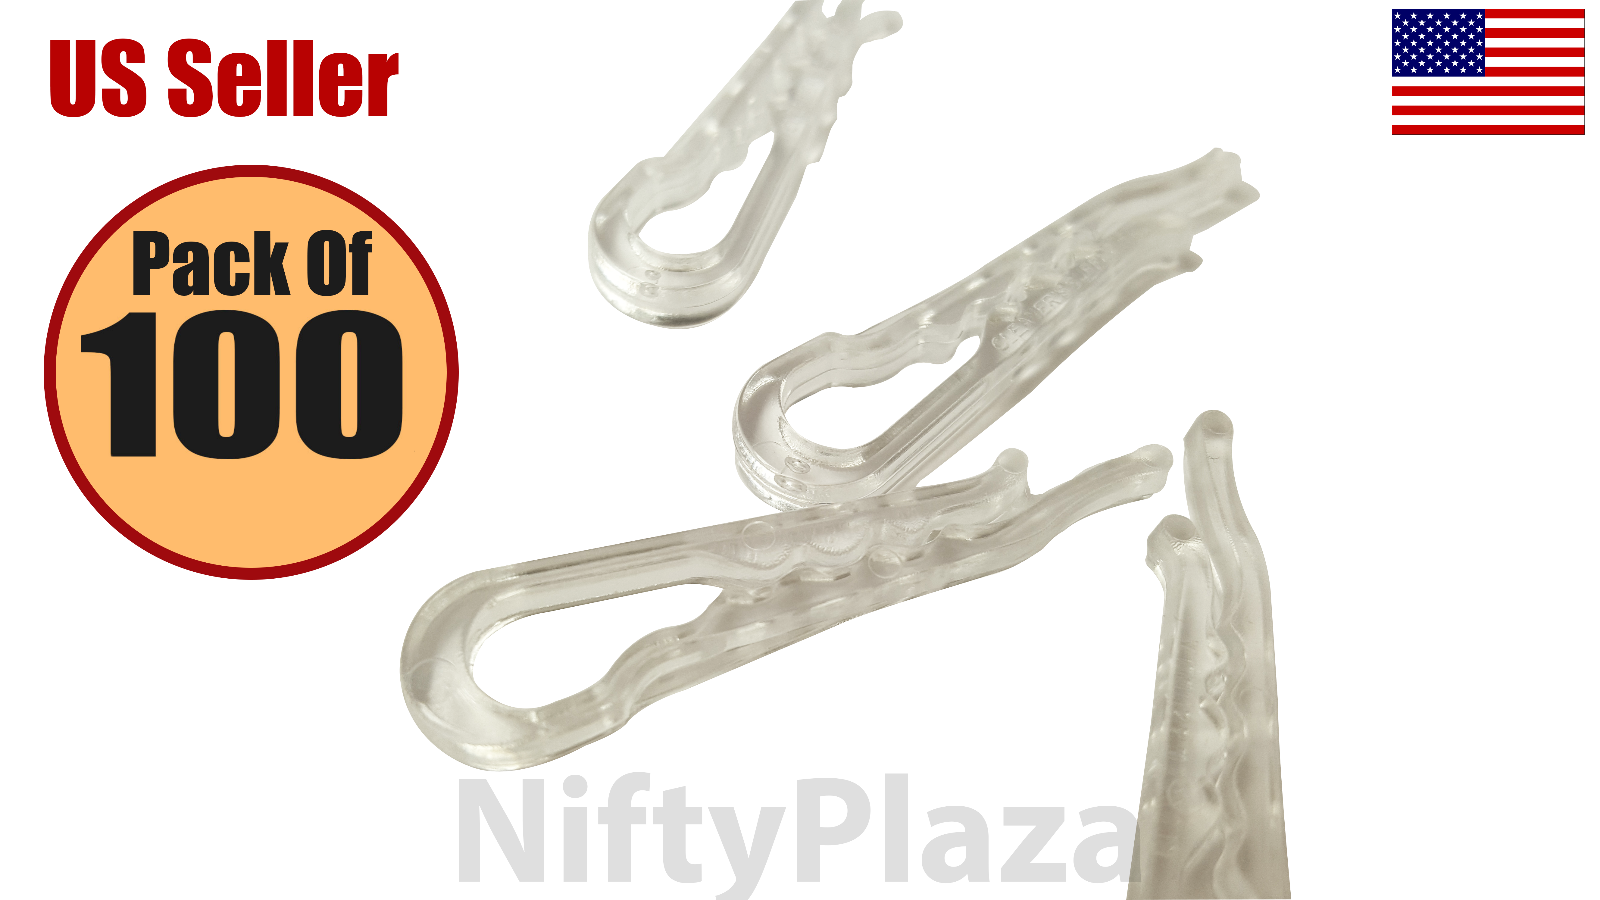 NiftyPlaza 100 Clear Plastic Alligator Clips for Shirts Folding Ties Socks Pants